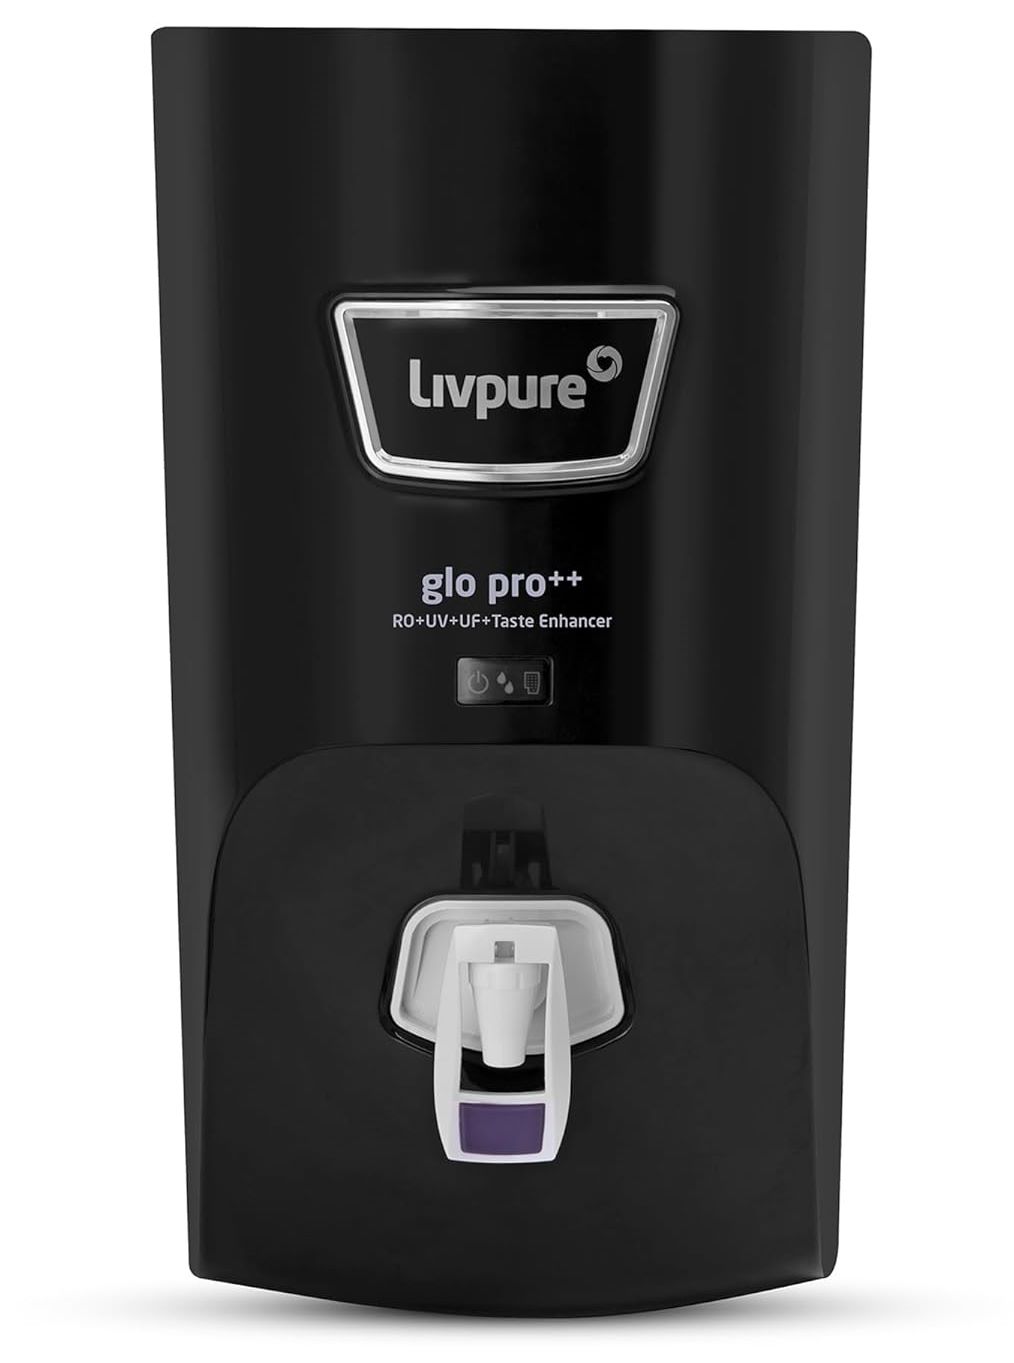 Livpure GLO PRO++ RO+UV+UF+Taste Enhancer